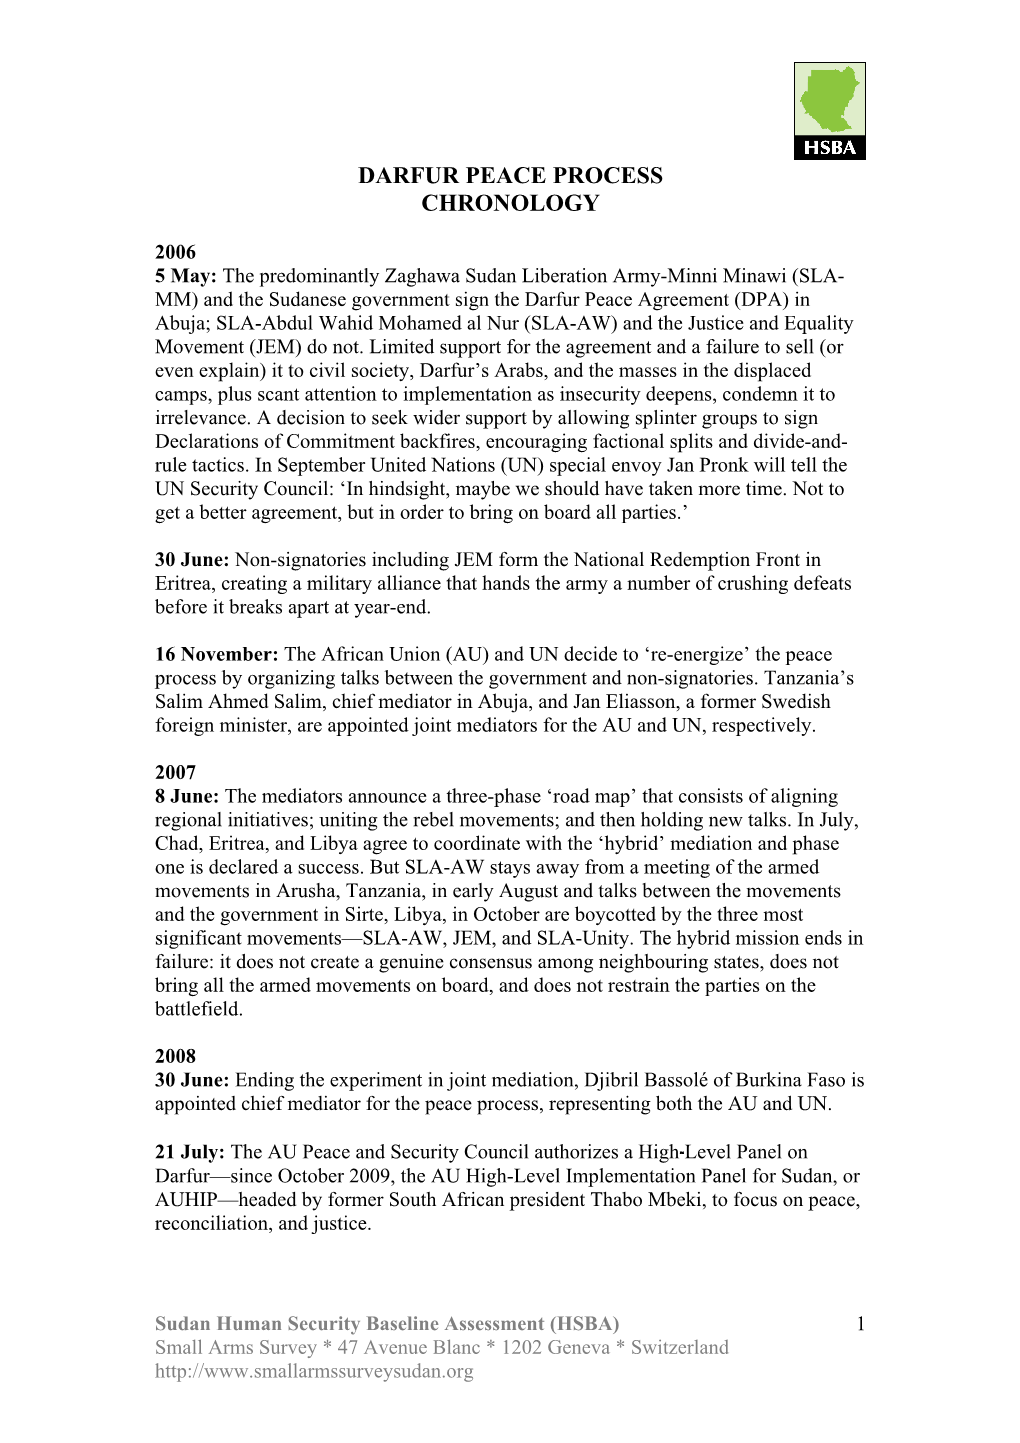 Darfur Peace Process Chronology